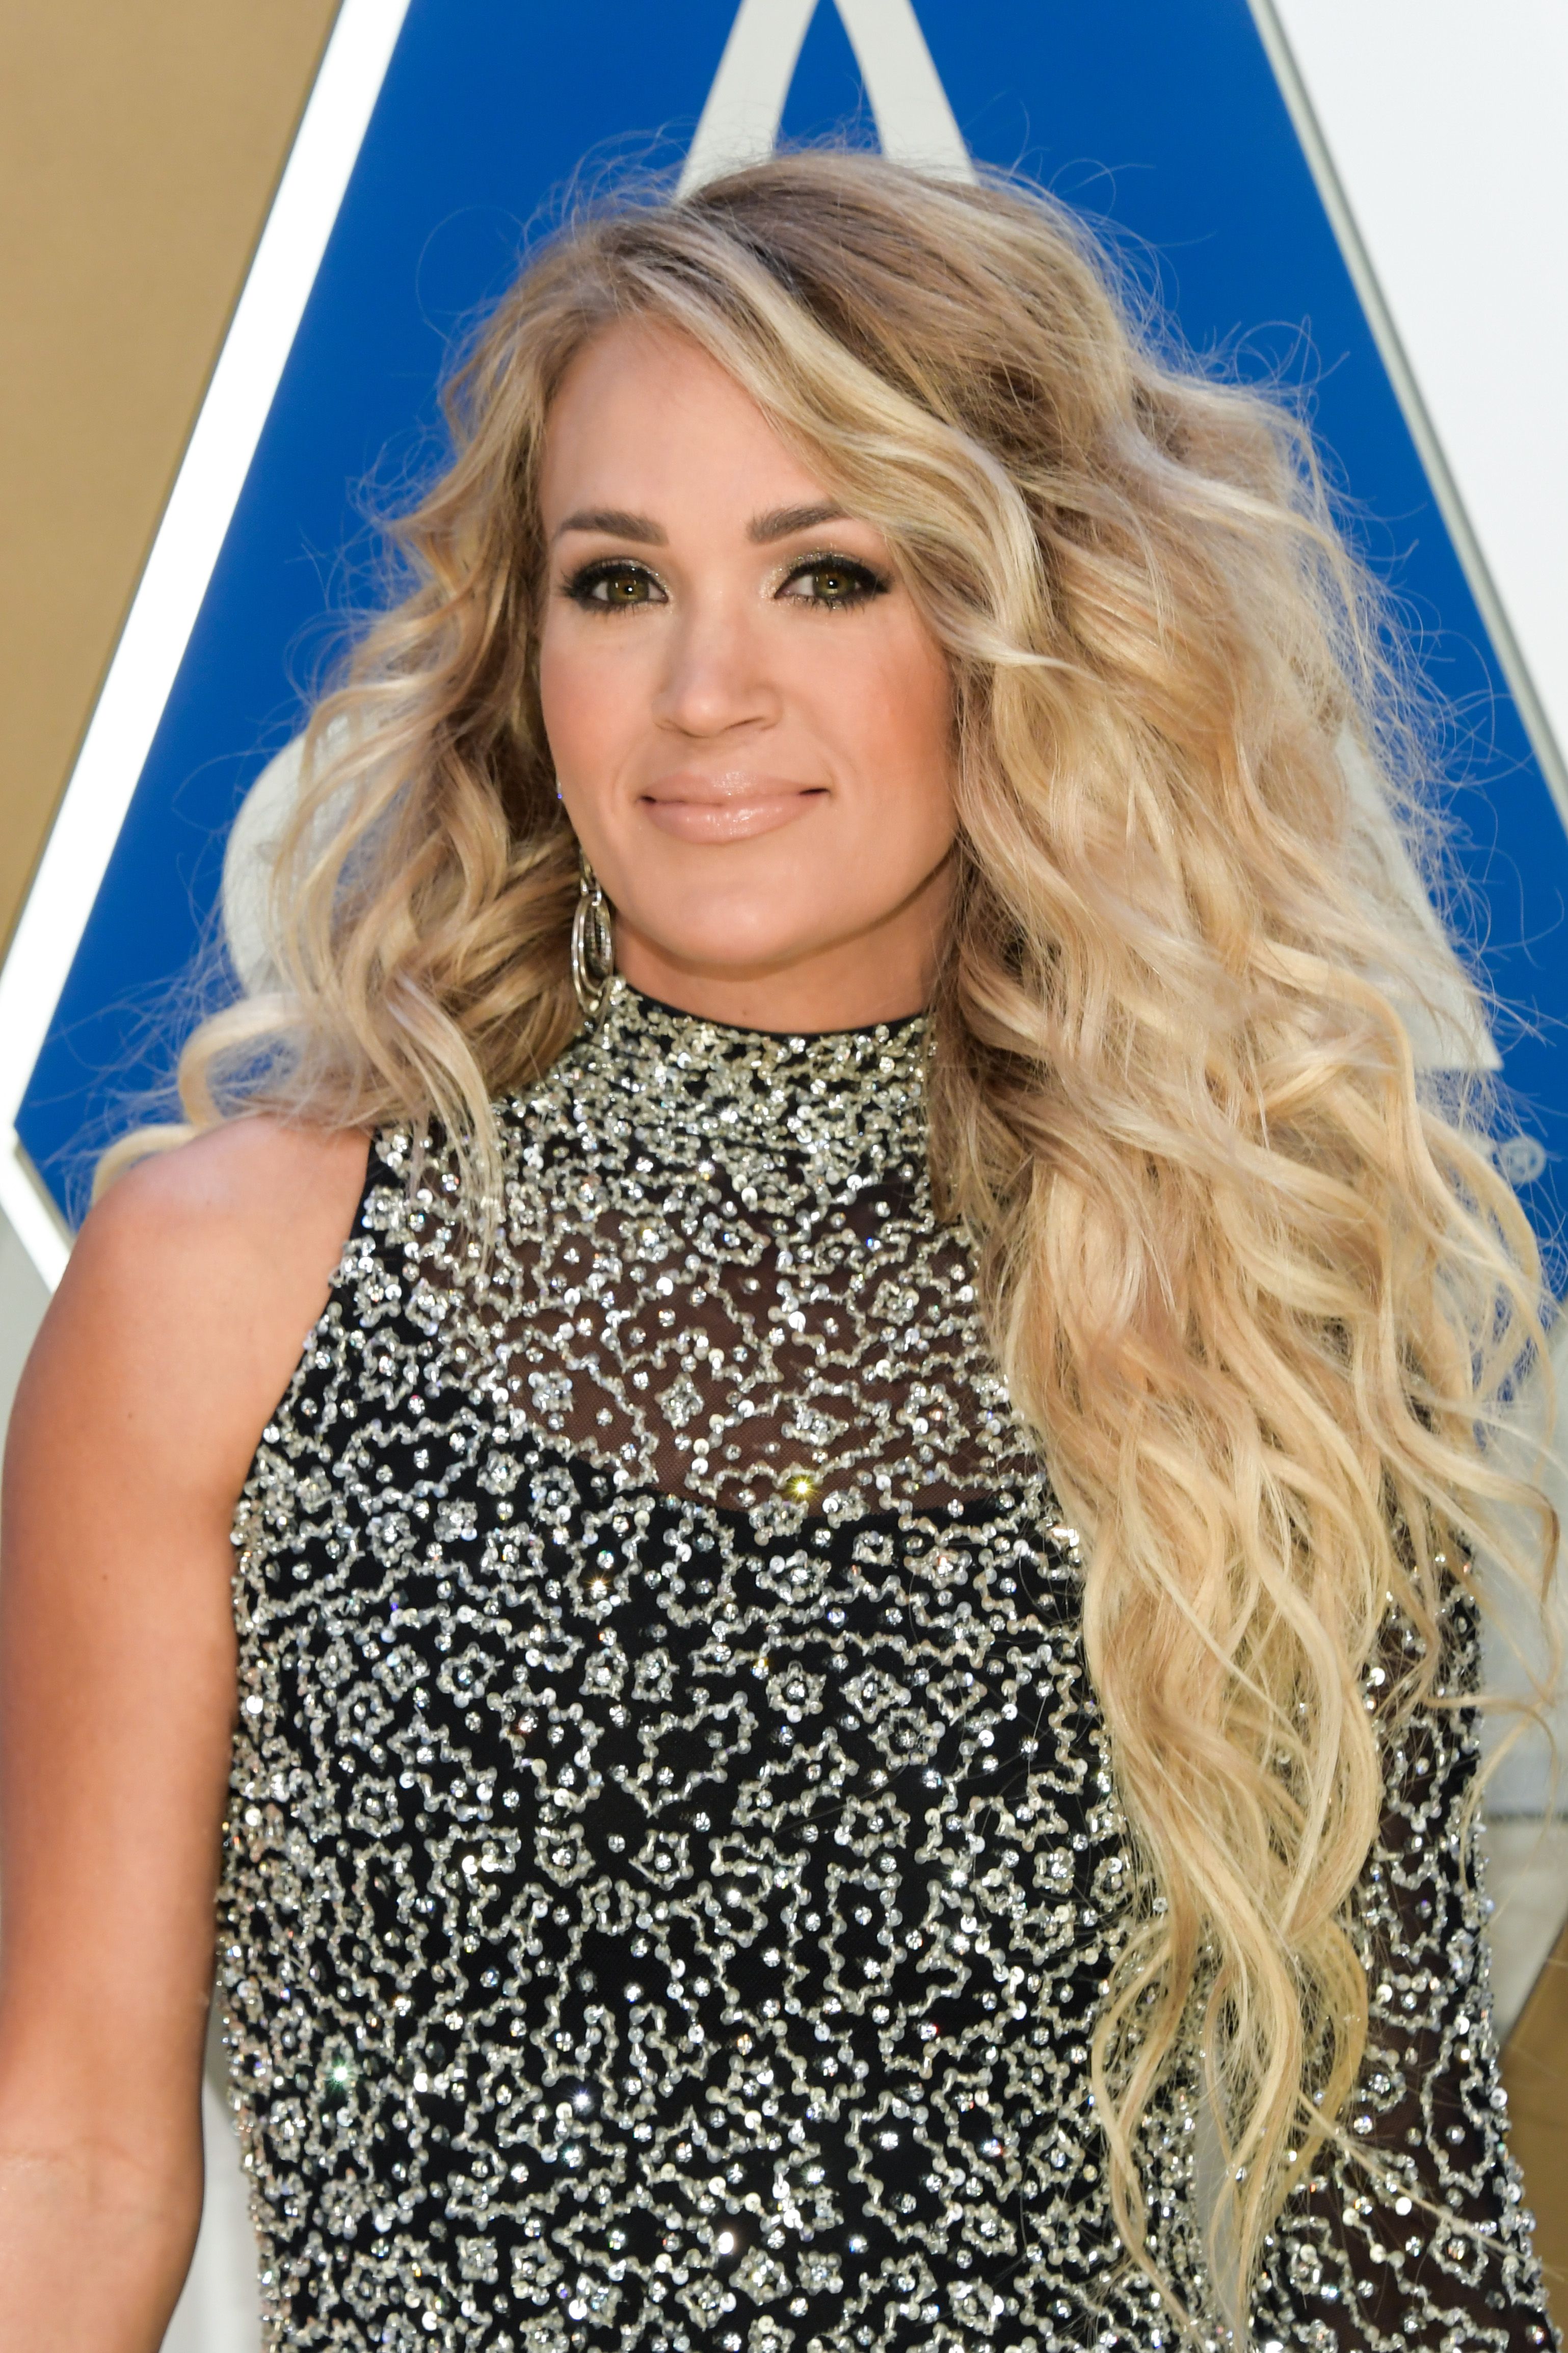 CMAs 2021: Carrie Underwood Duets With Jason Aldean